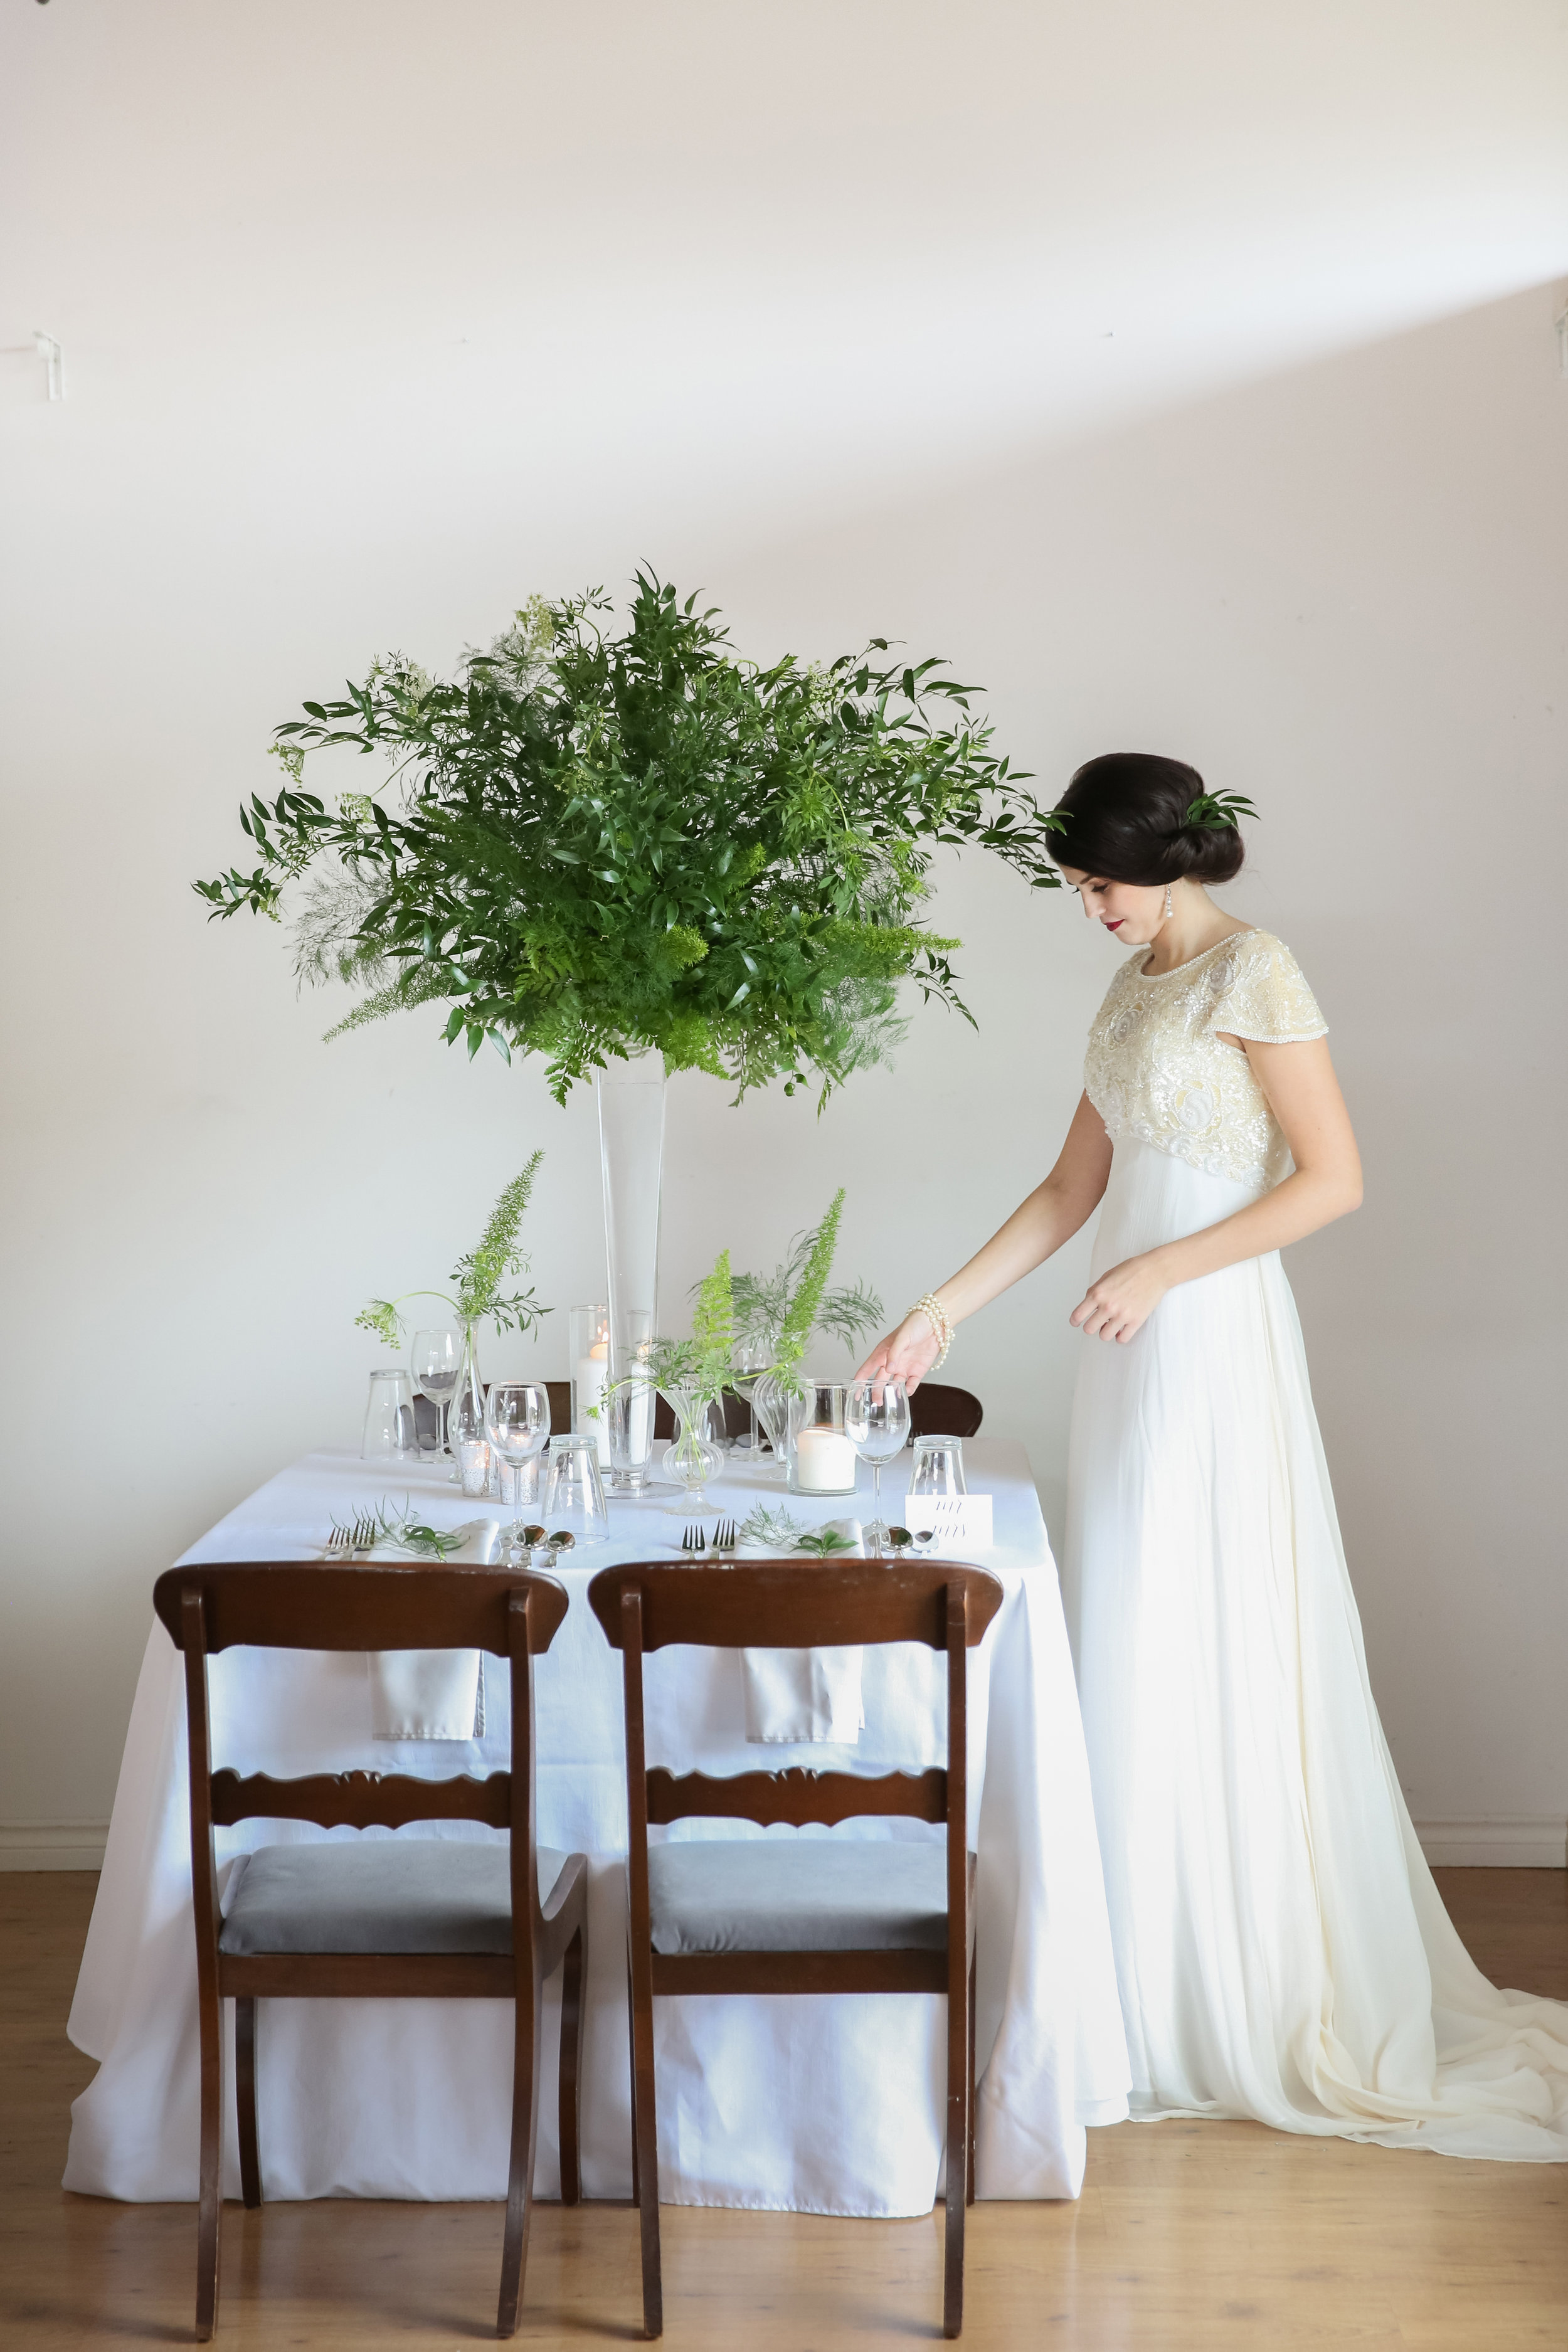  Wedding decors by Abbotsford wedding Florist, Floral Design by Lili 